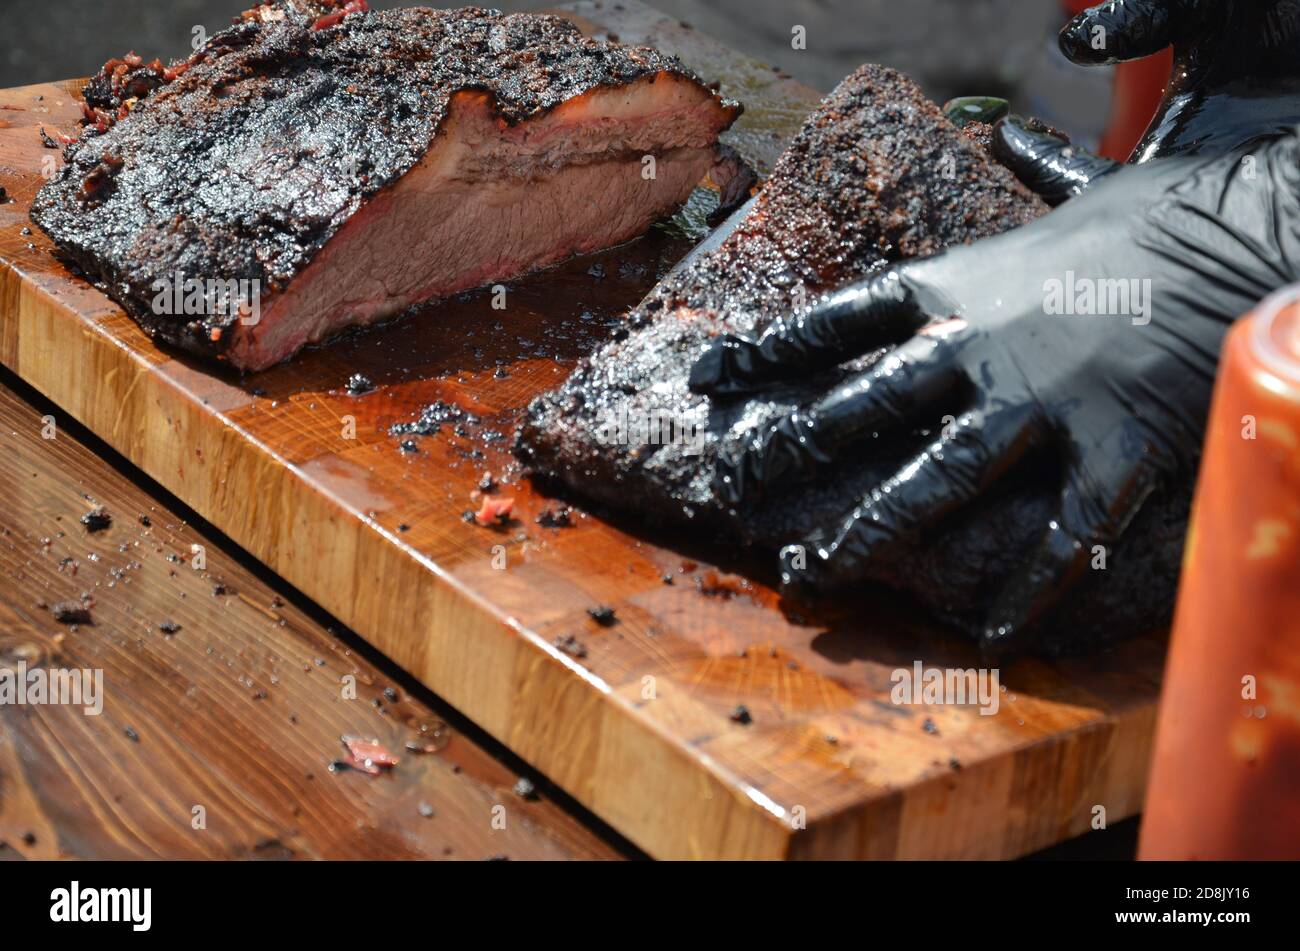 https://c8.alamy.com/comp/2D8JY16/a-big-piece-of-freshly-prepared-grilled-meat-the-chef-cuts-fresh-grilled-meat-grilled-beef-steak-medium-rare-on-wooden-cutting-board-2D8JY16.jpg